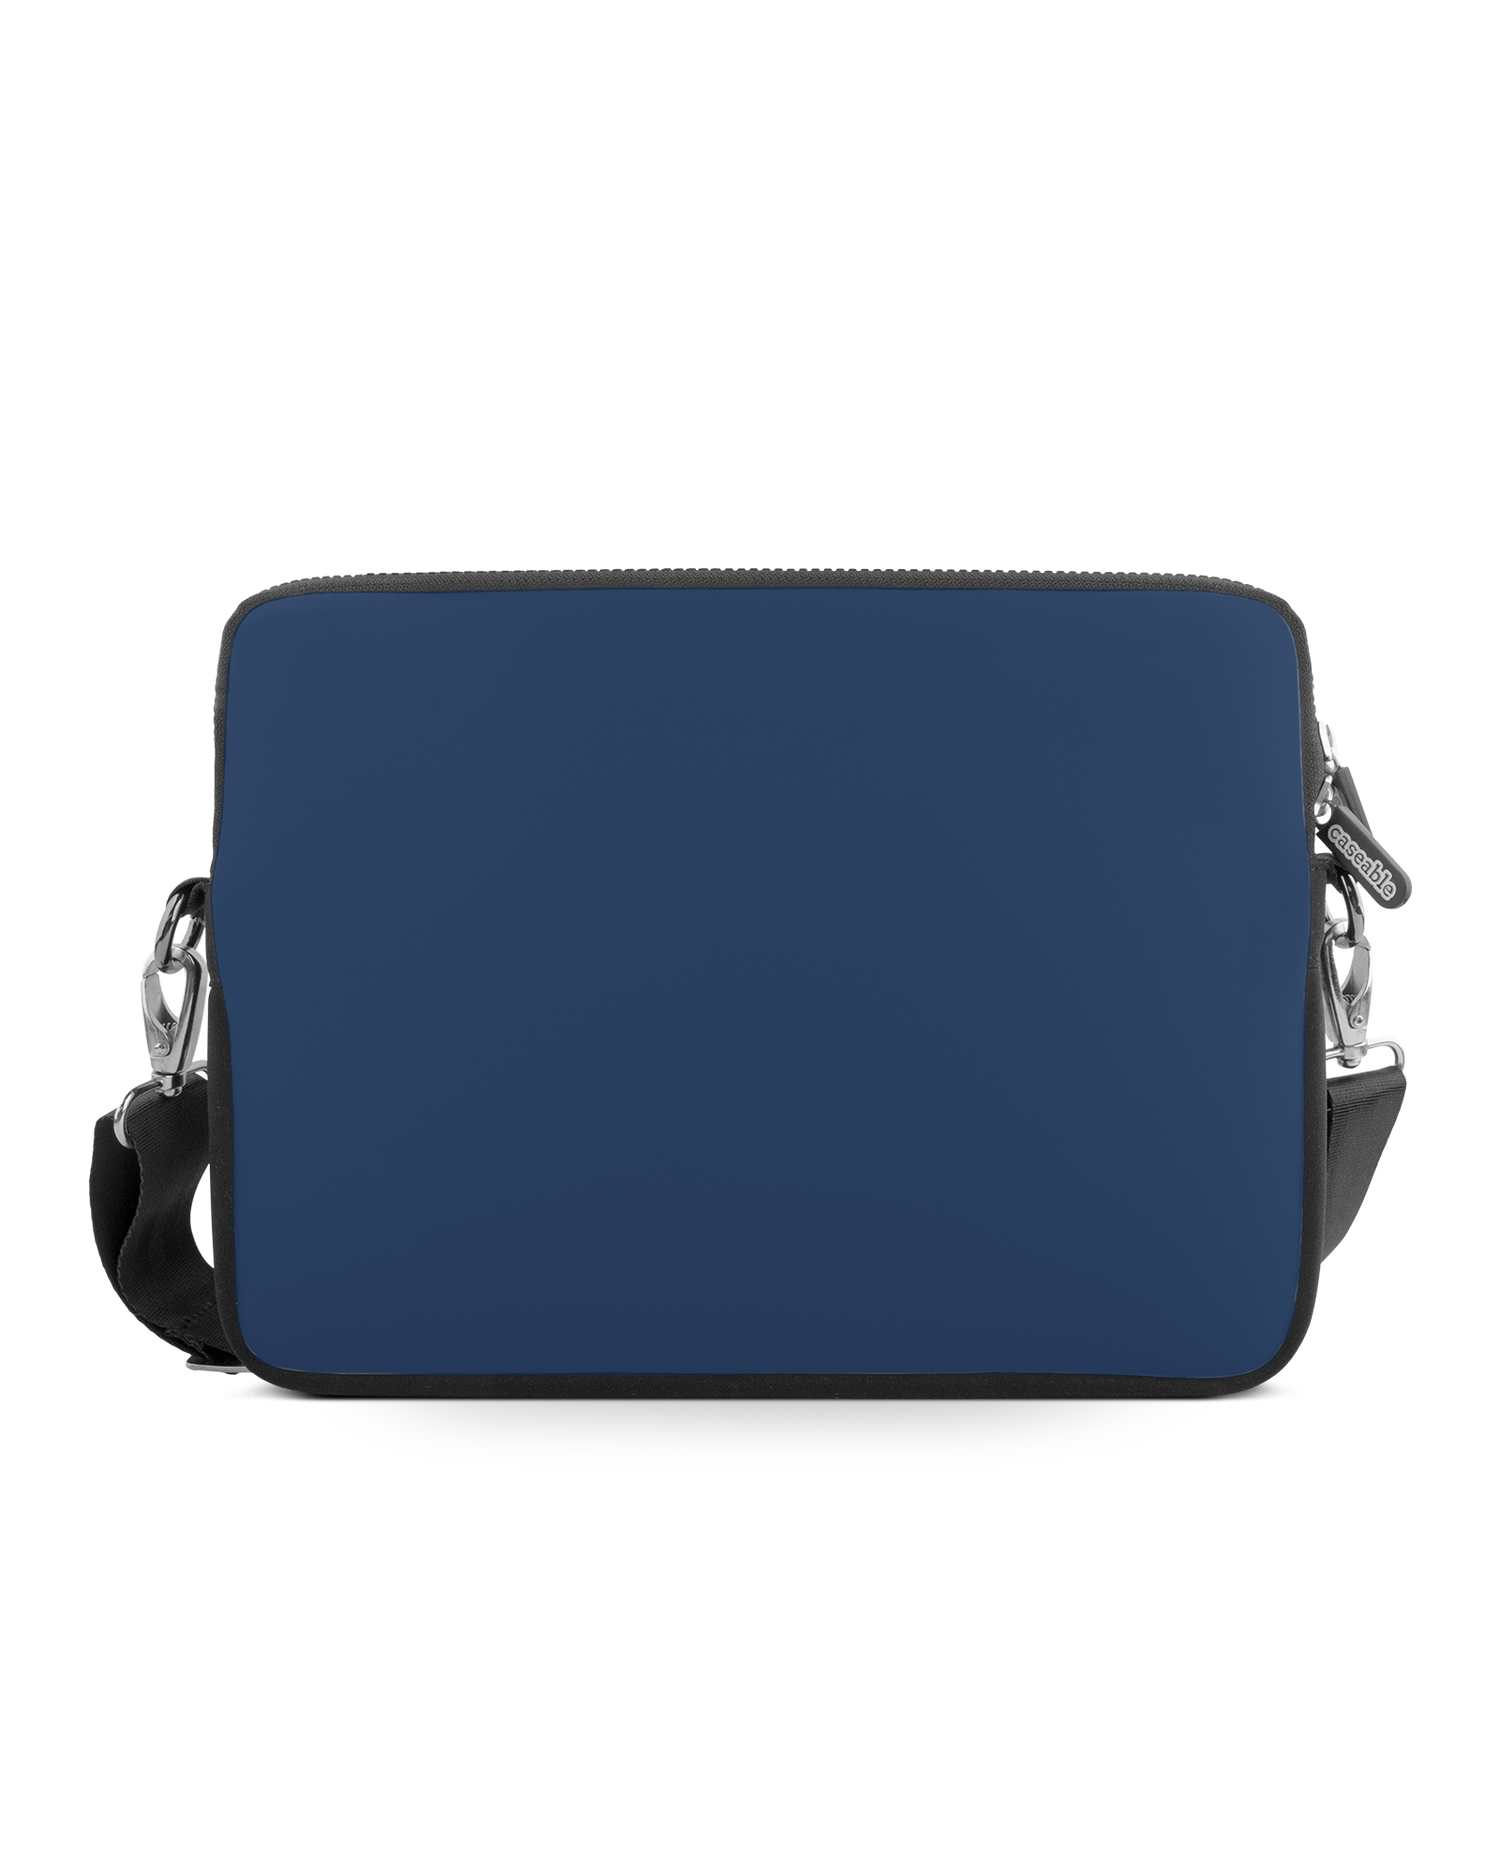 NAVY Premium Laptop Bag 15 inch: Front View